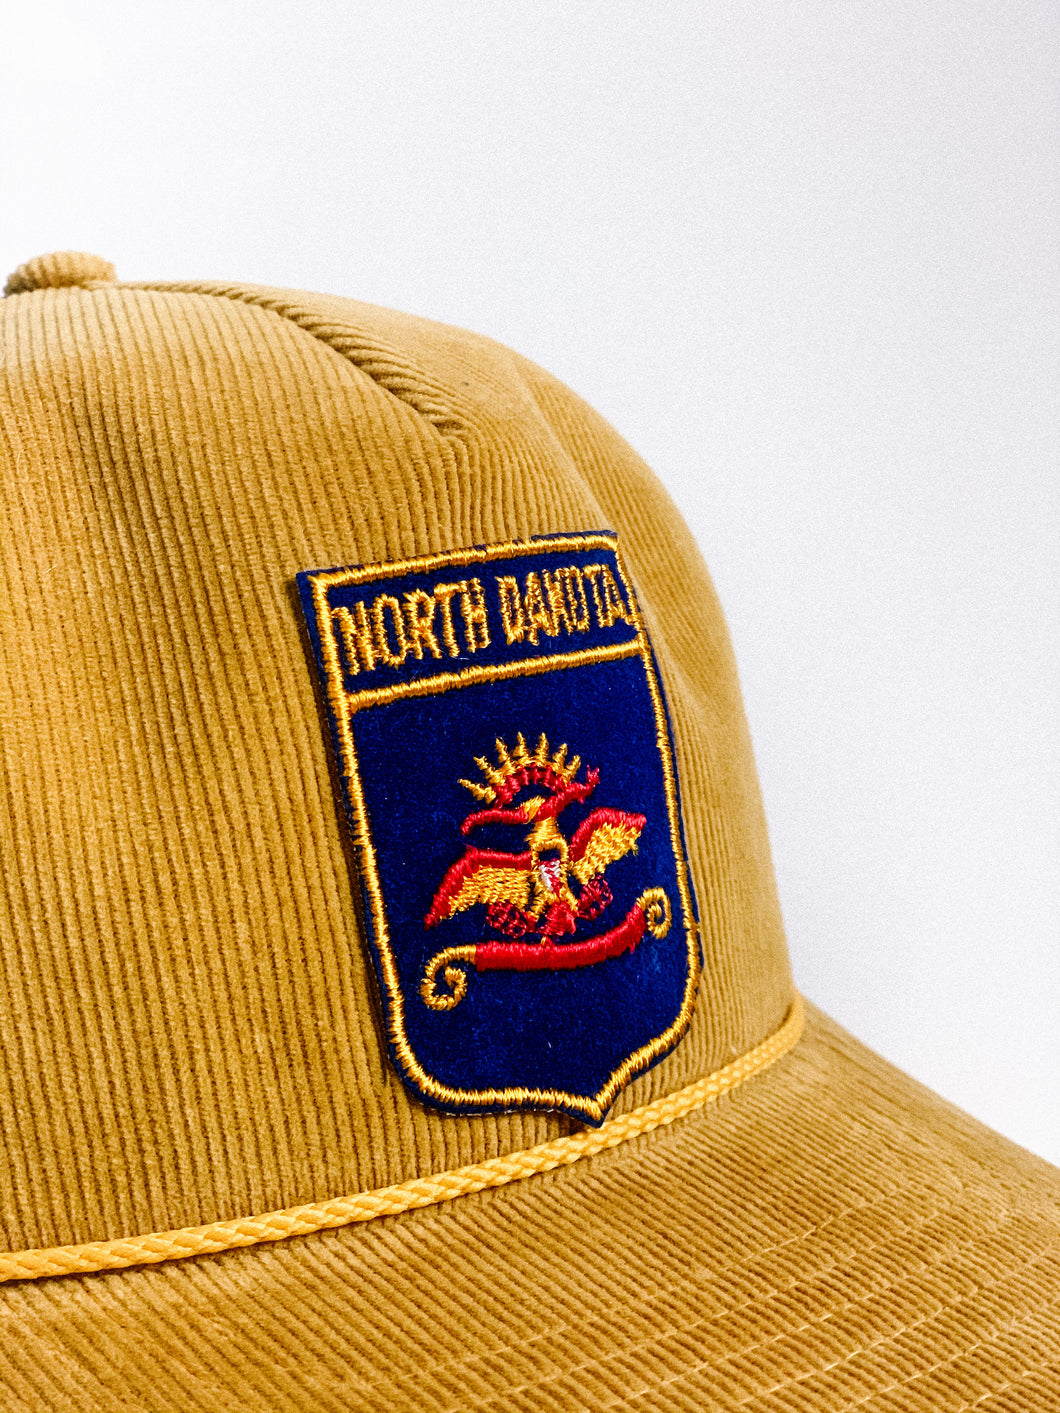 north dakota patch hat